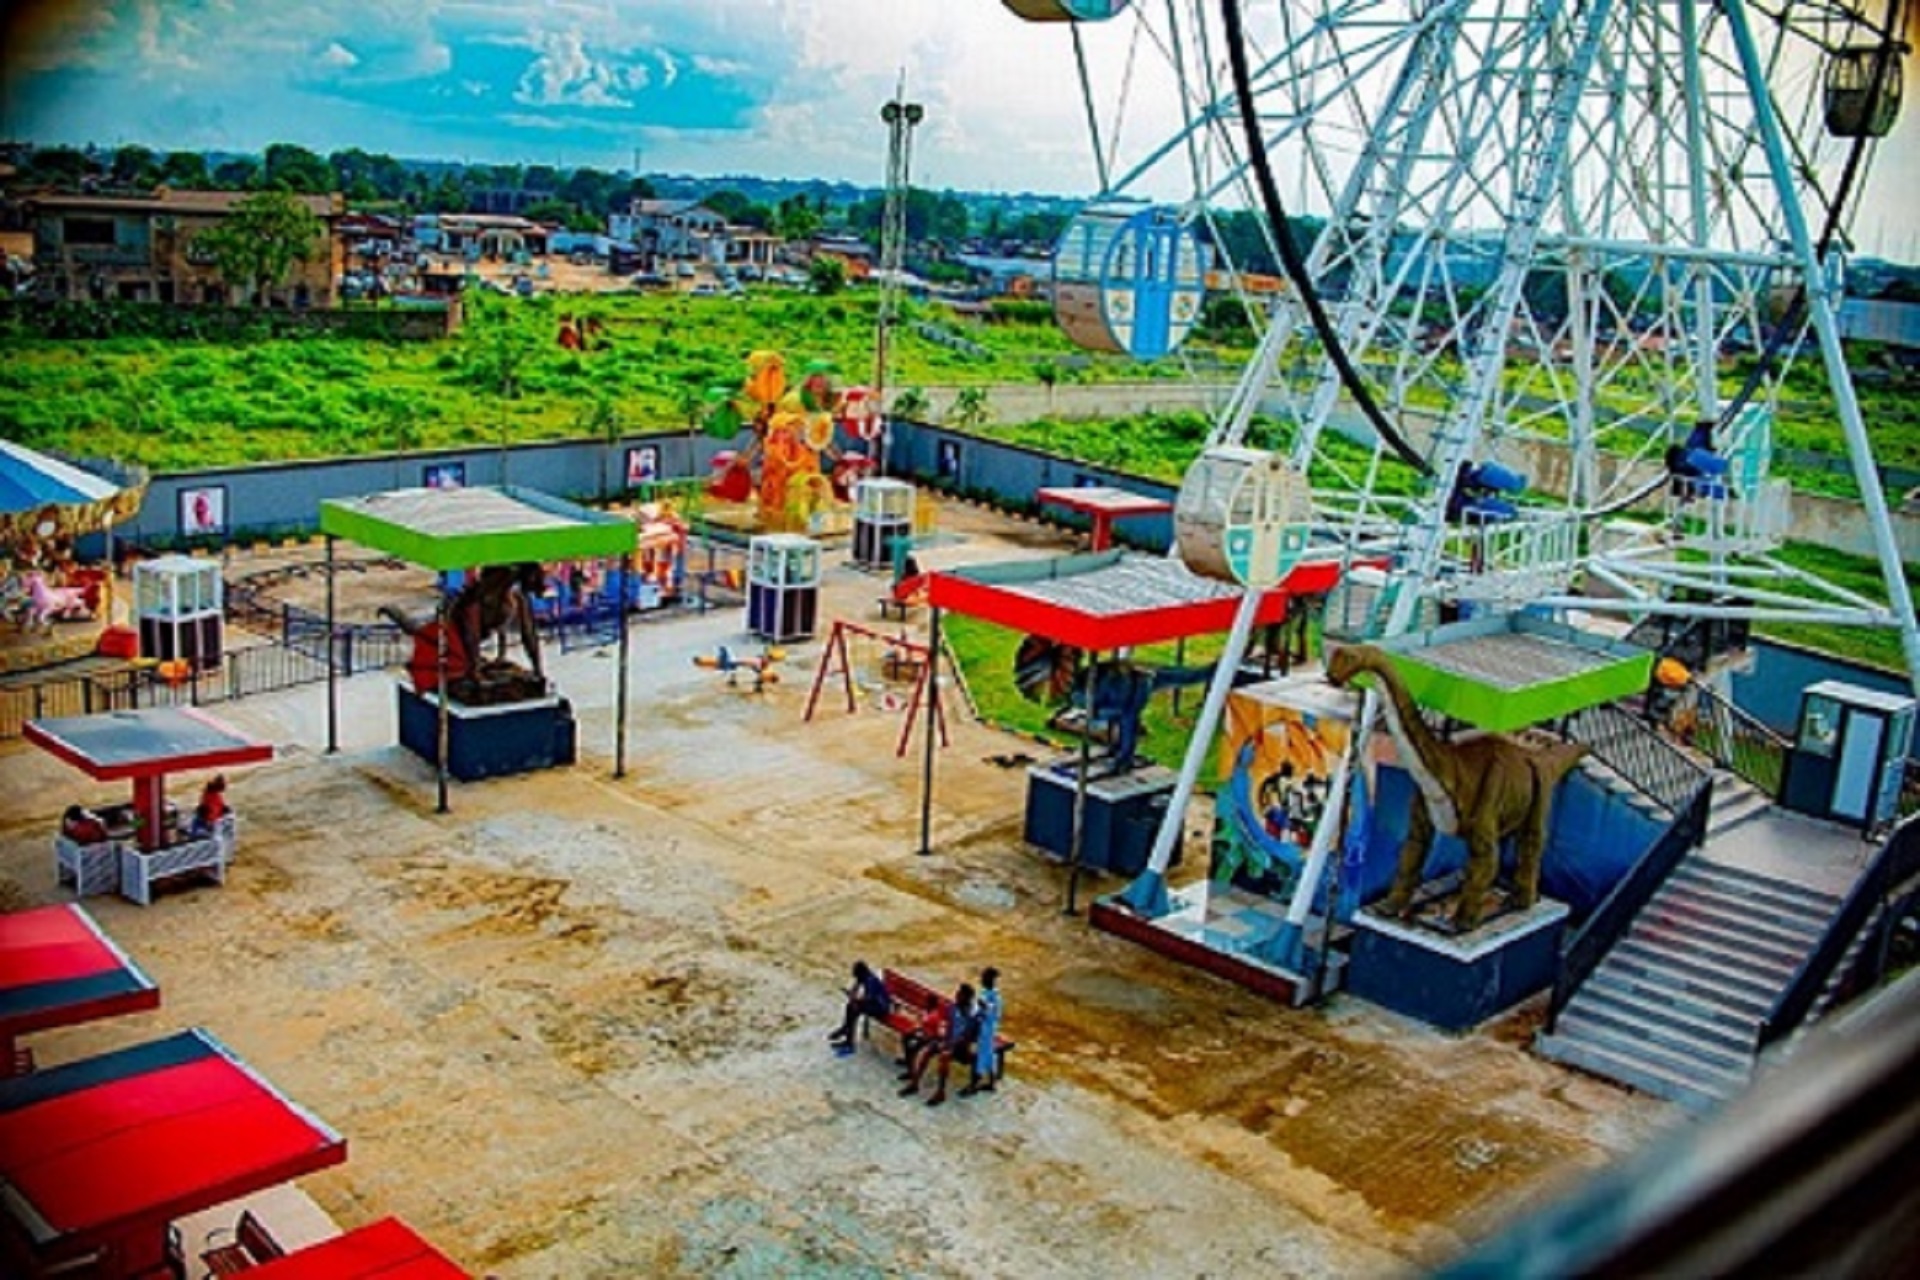 Home - Dream world Amusement park